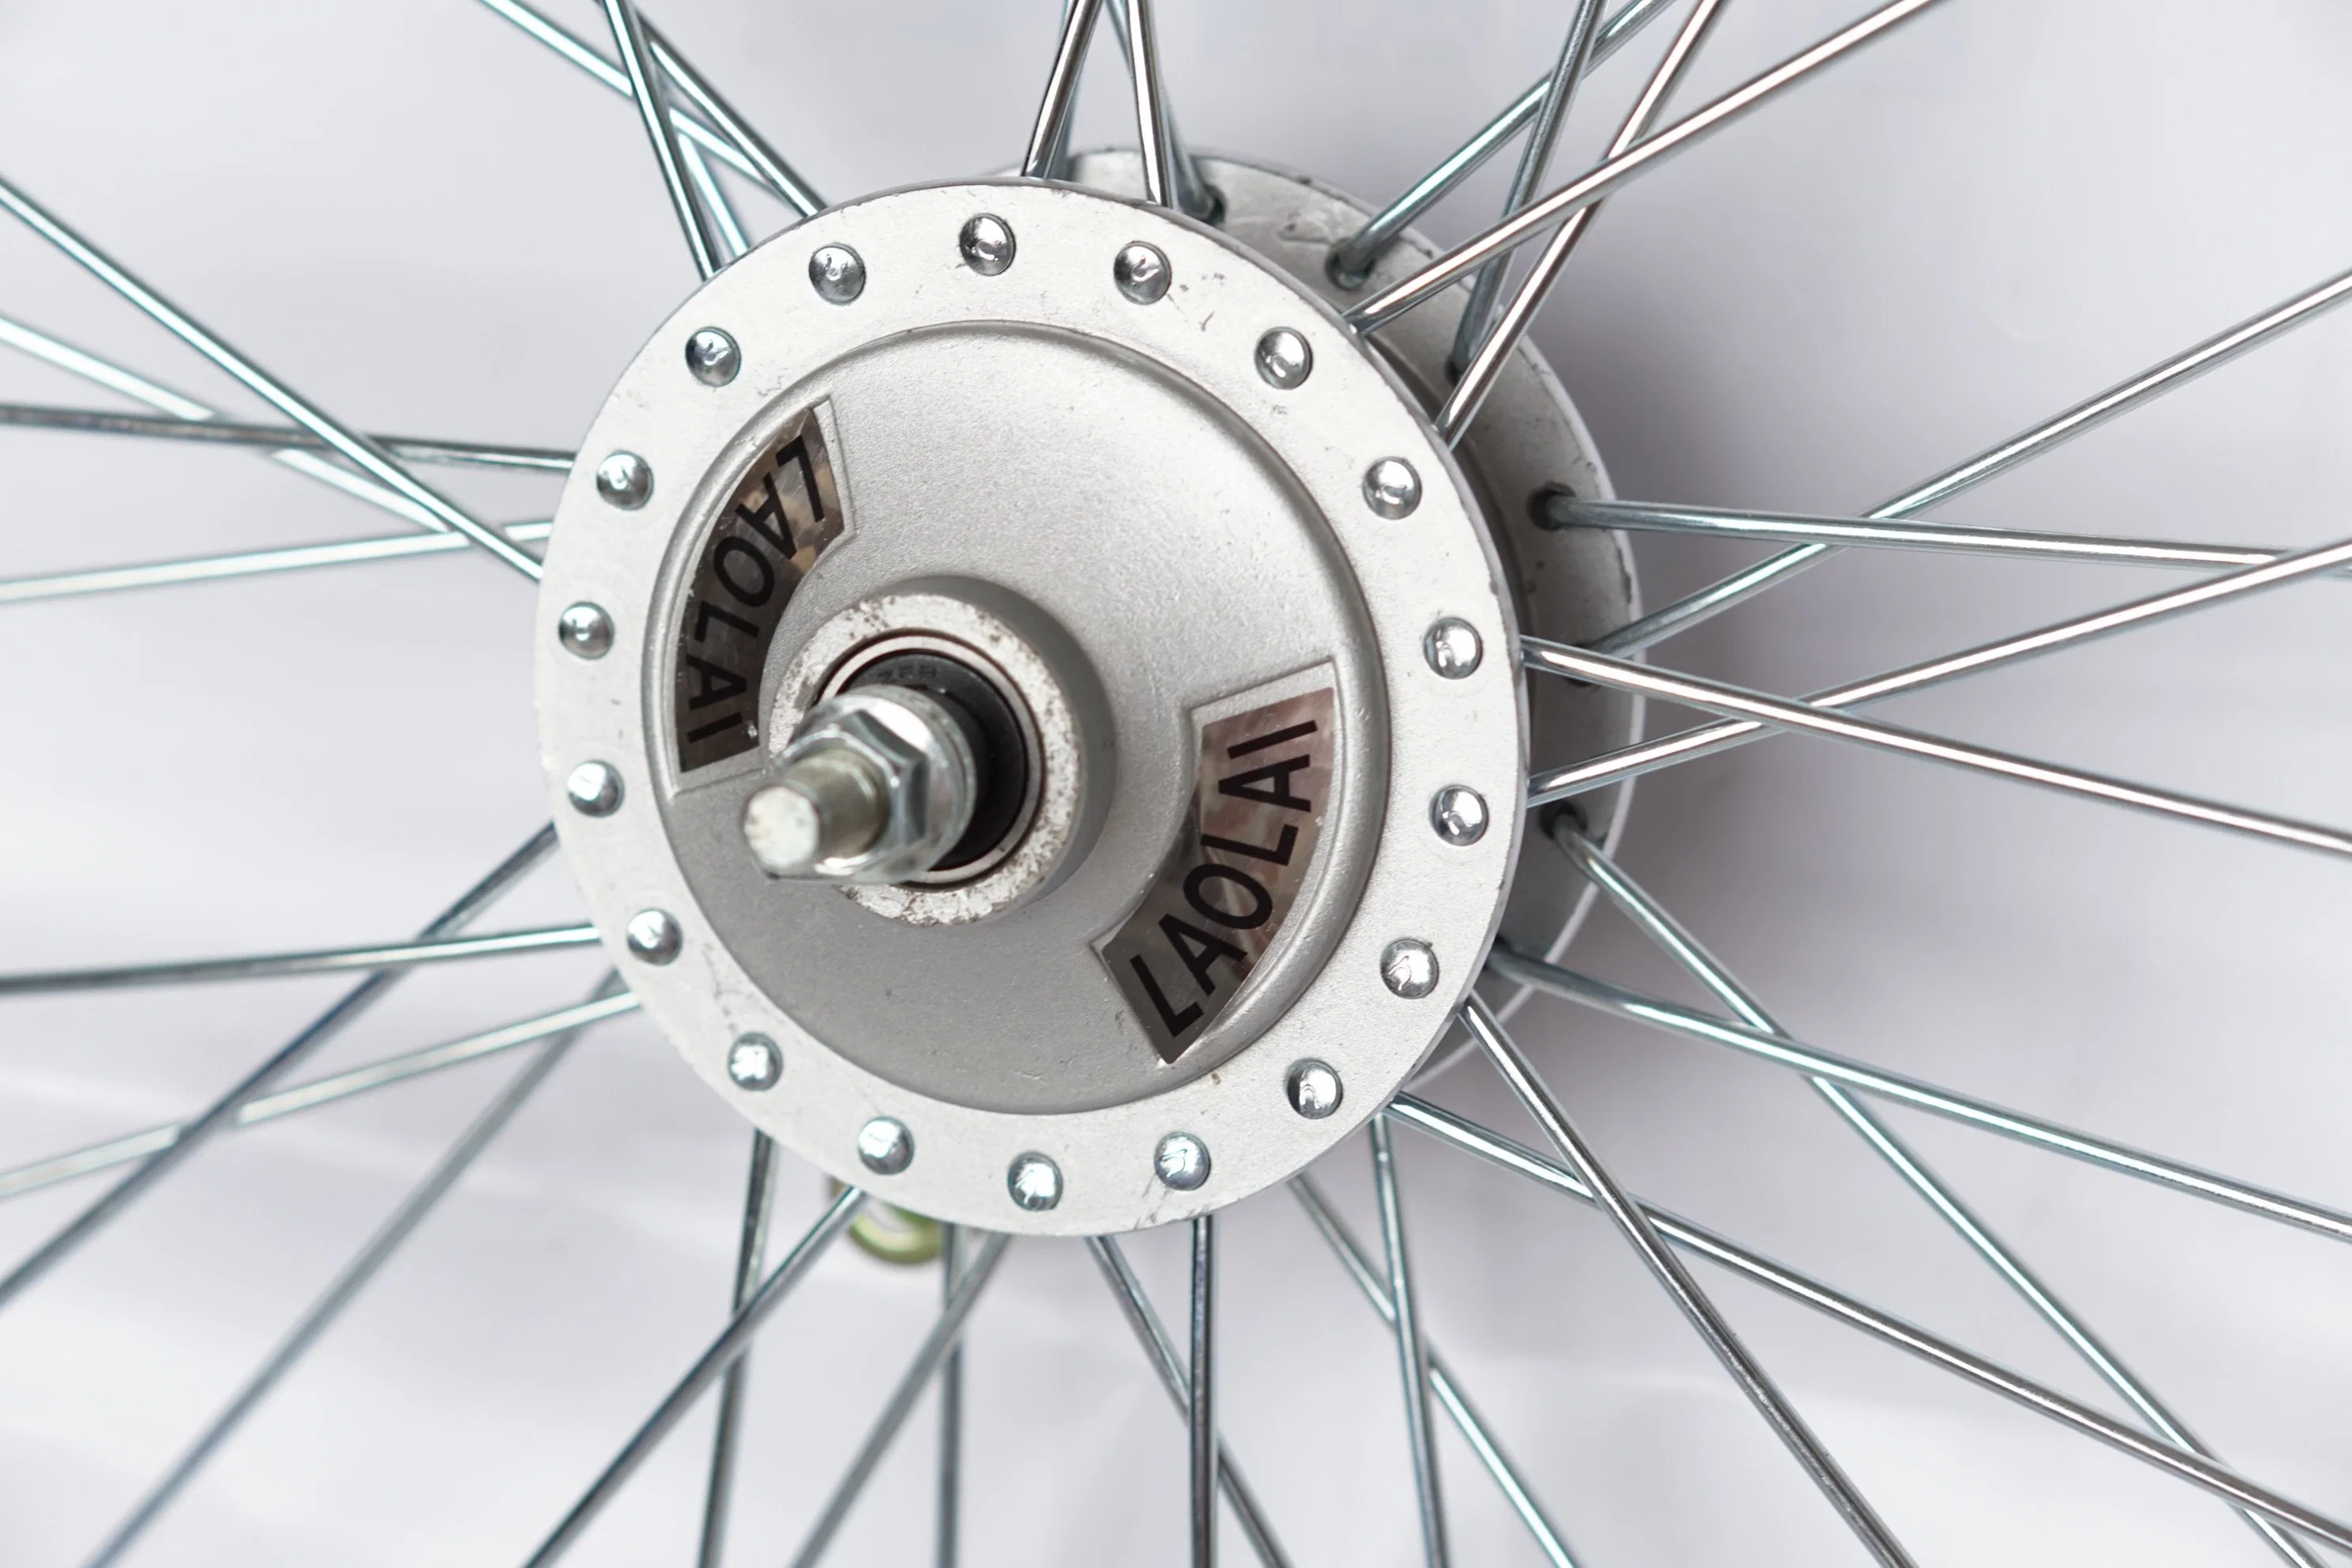 24inch Aluminium-Legierung Fahrrad Rad Stadt E-Bike Hochwertige Accessoires